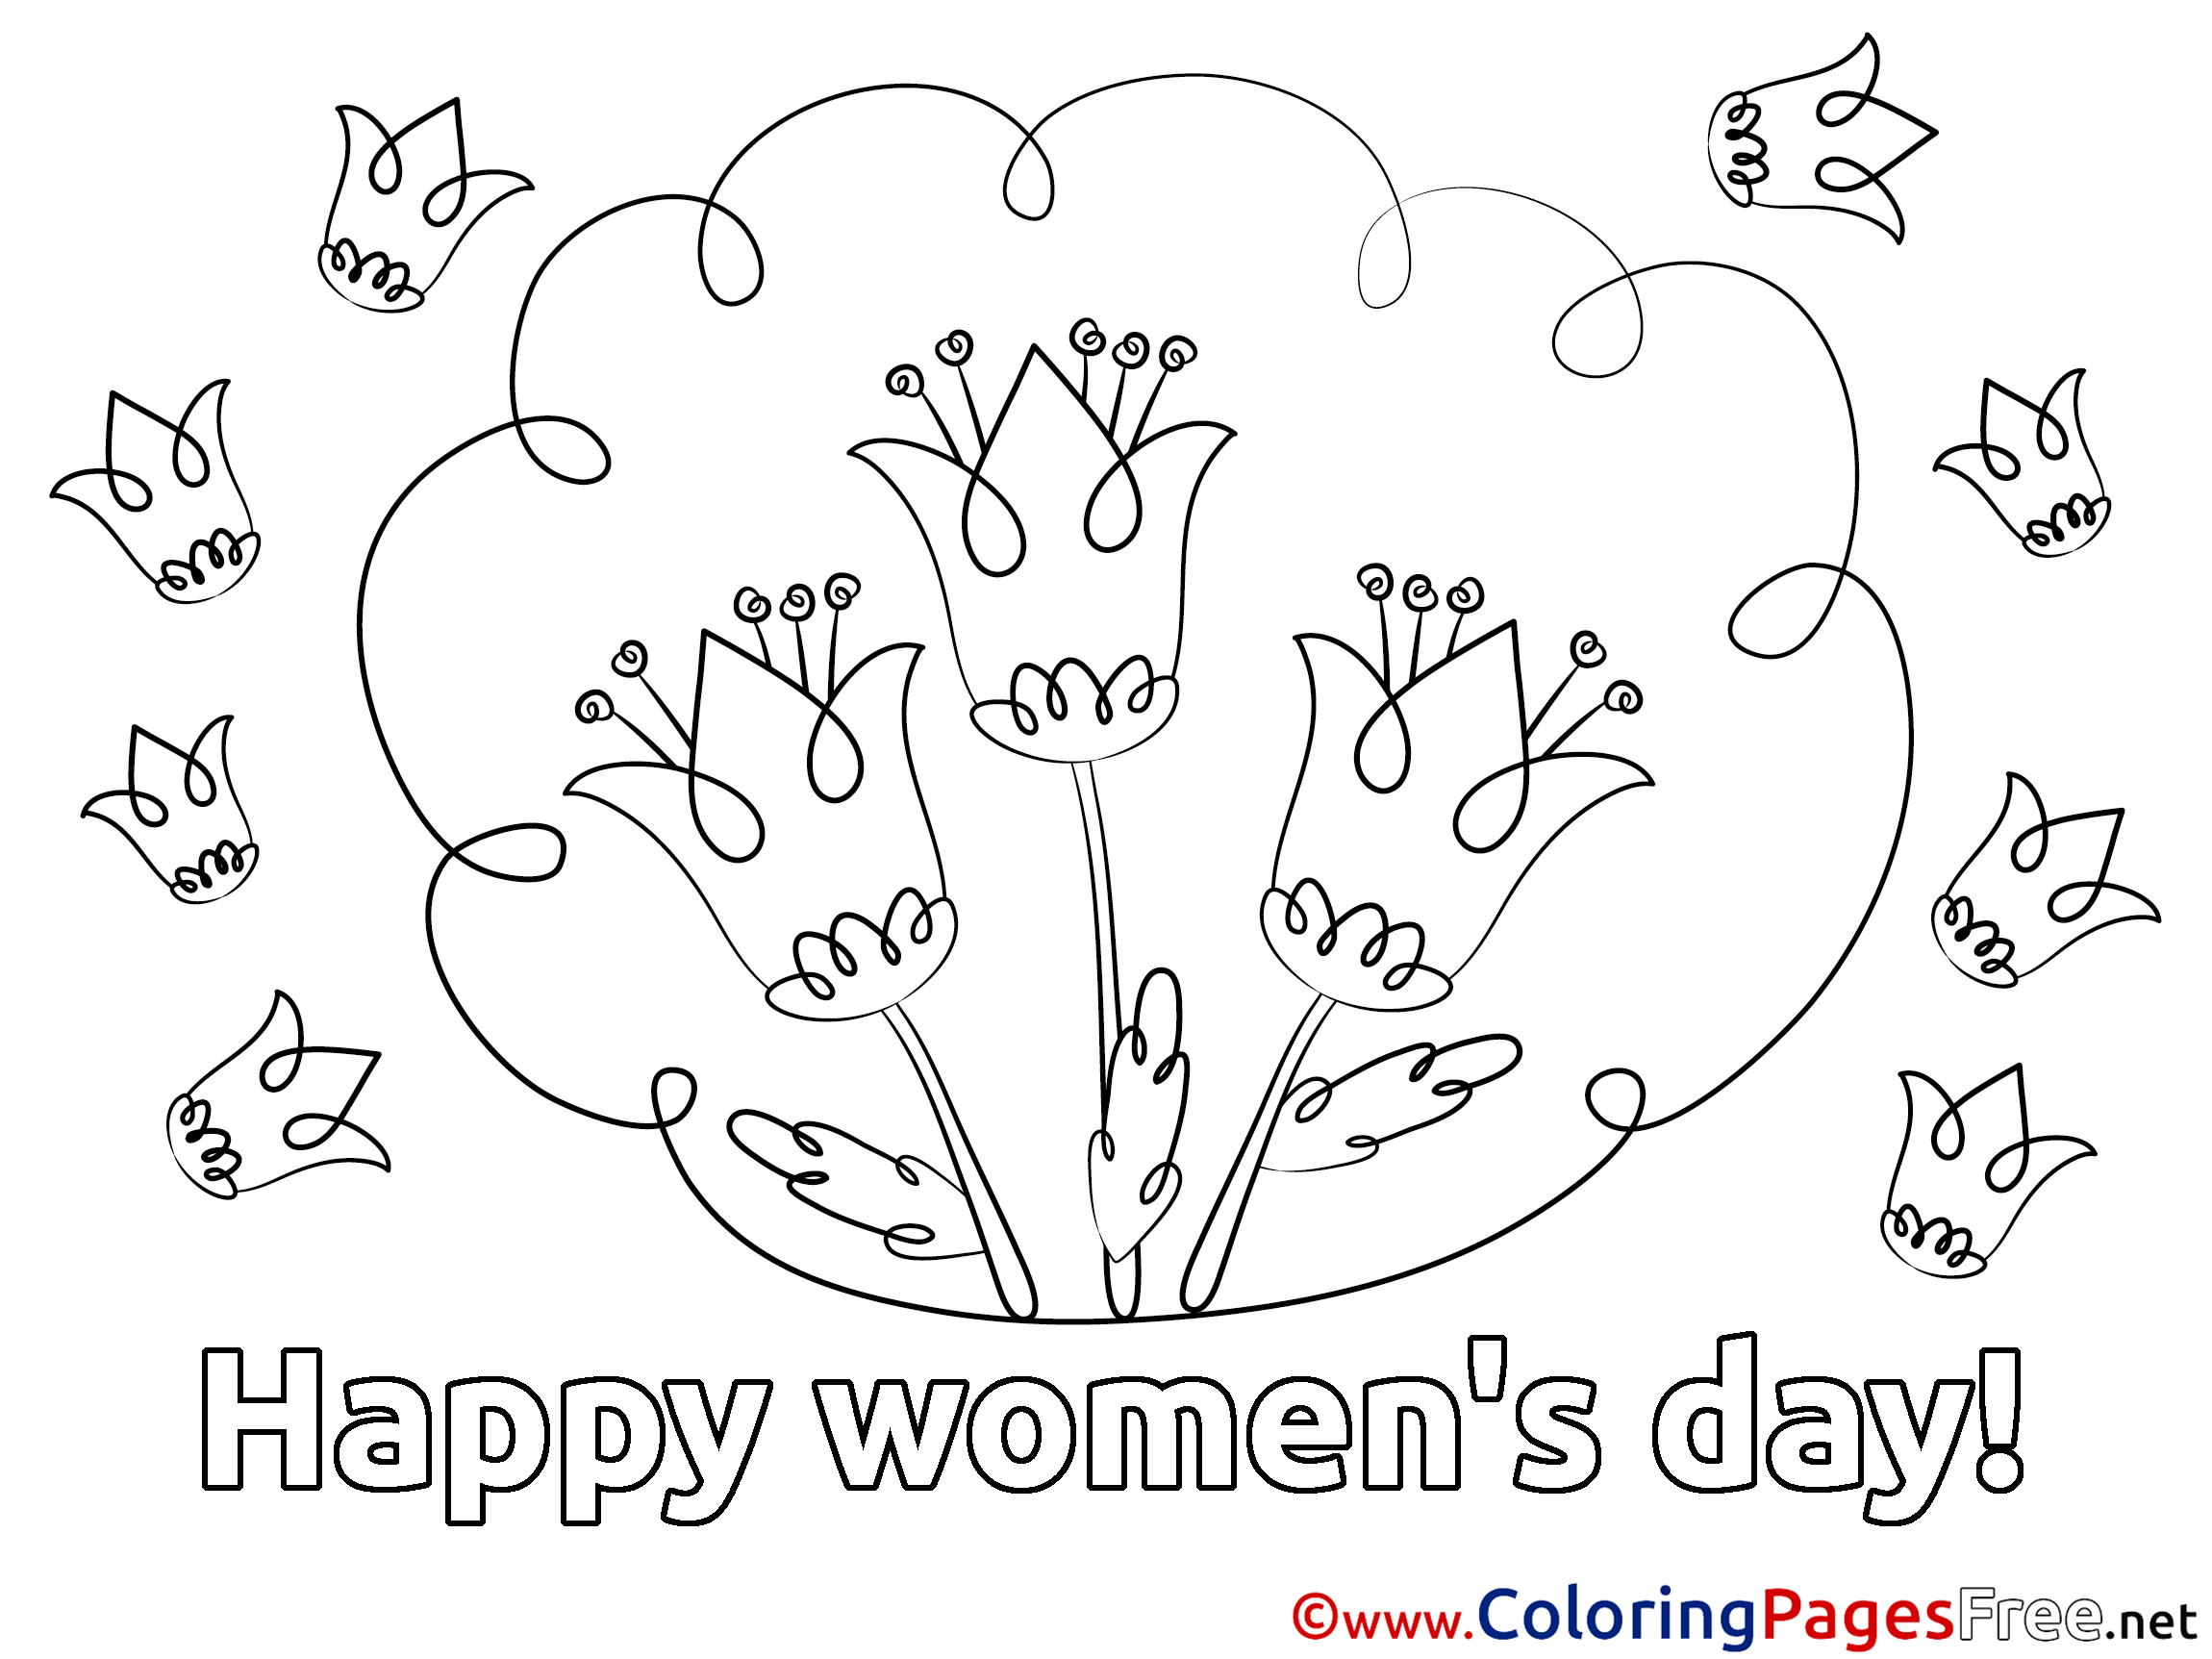 8 march worksheets for kids. Women's Day раскраска. Женский день раскраски для детей. Happy women's Day раскраска.